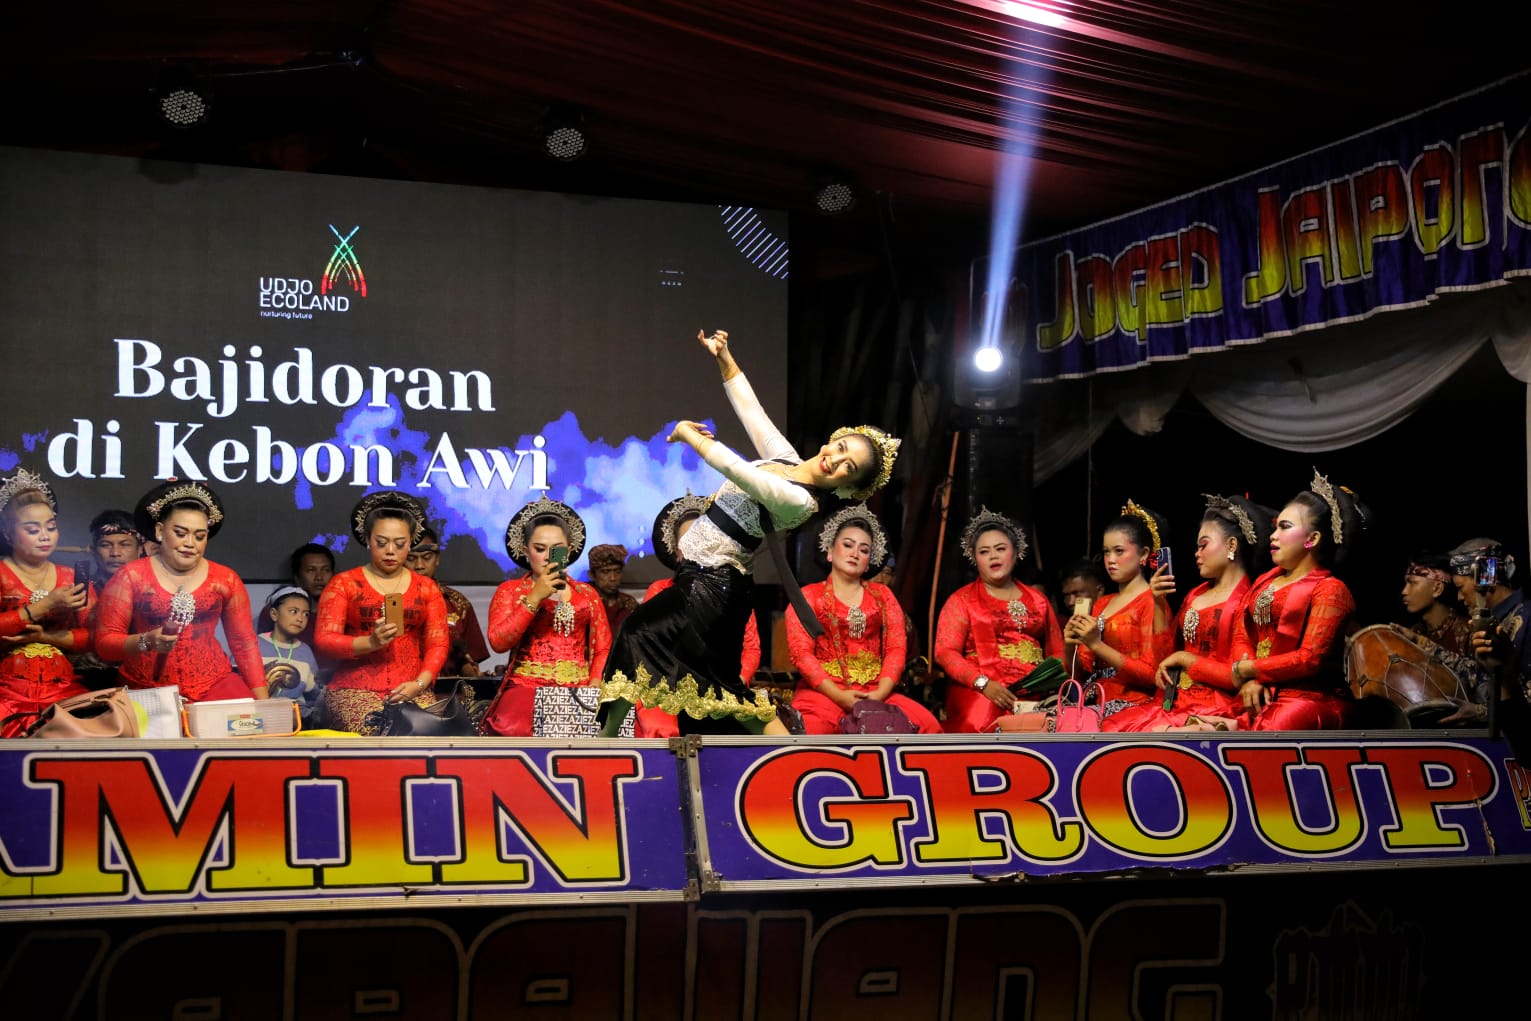 Kegiatan pentas kesenian tradisional 'Bajidoran di Kebon Awi' bersama ratusan masyarakat di Udjo Ecoland, Cimenyan, Bandung, Jawa Barat, Rabu (27/9).